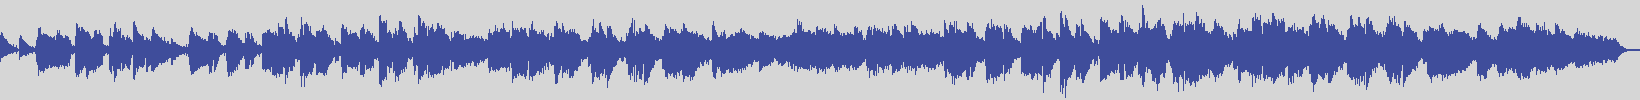 digiphonic_records [DPR010] Bernard Bess, The Fantastic Royal Orchestra - Moon River ( Colazione Da Tyffany ) [Original Mix] audio wave form